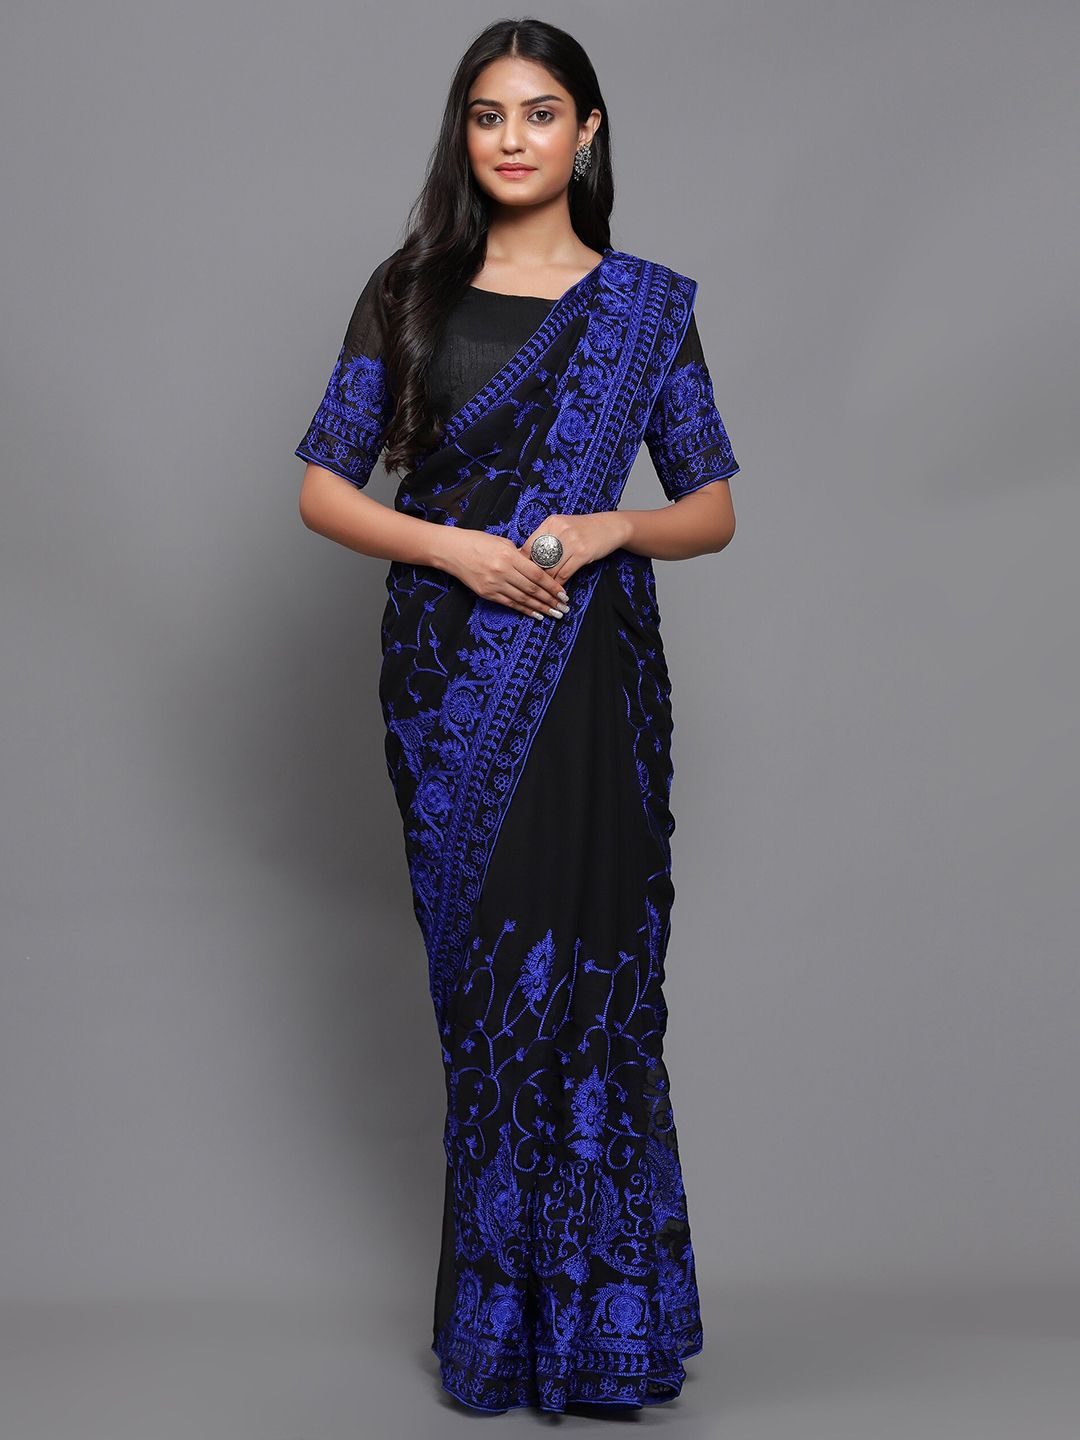 3BUDDY FASHION Black & Blue Floral Embroidered Venkatgiri Saree Price in India